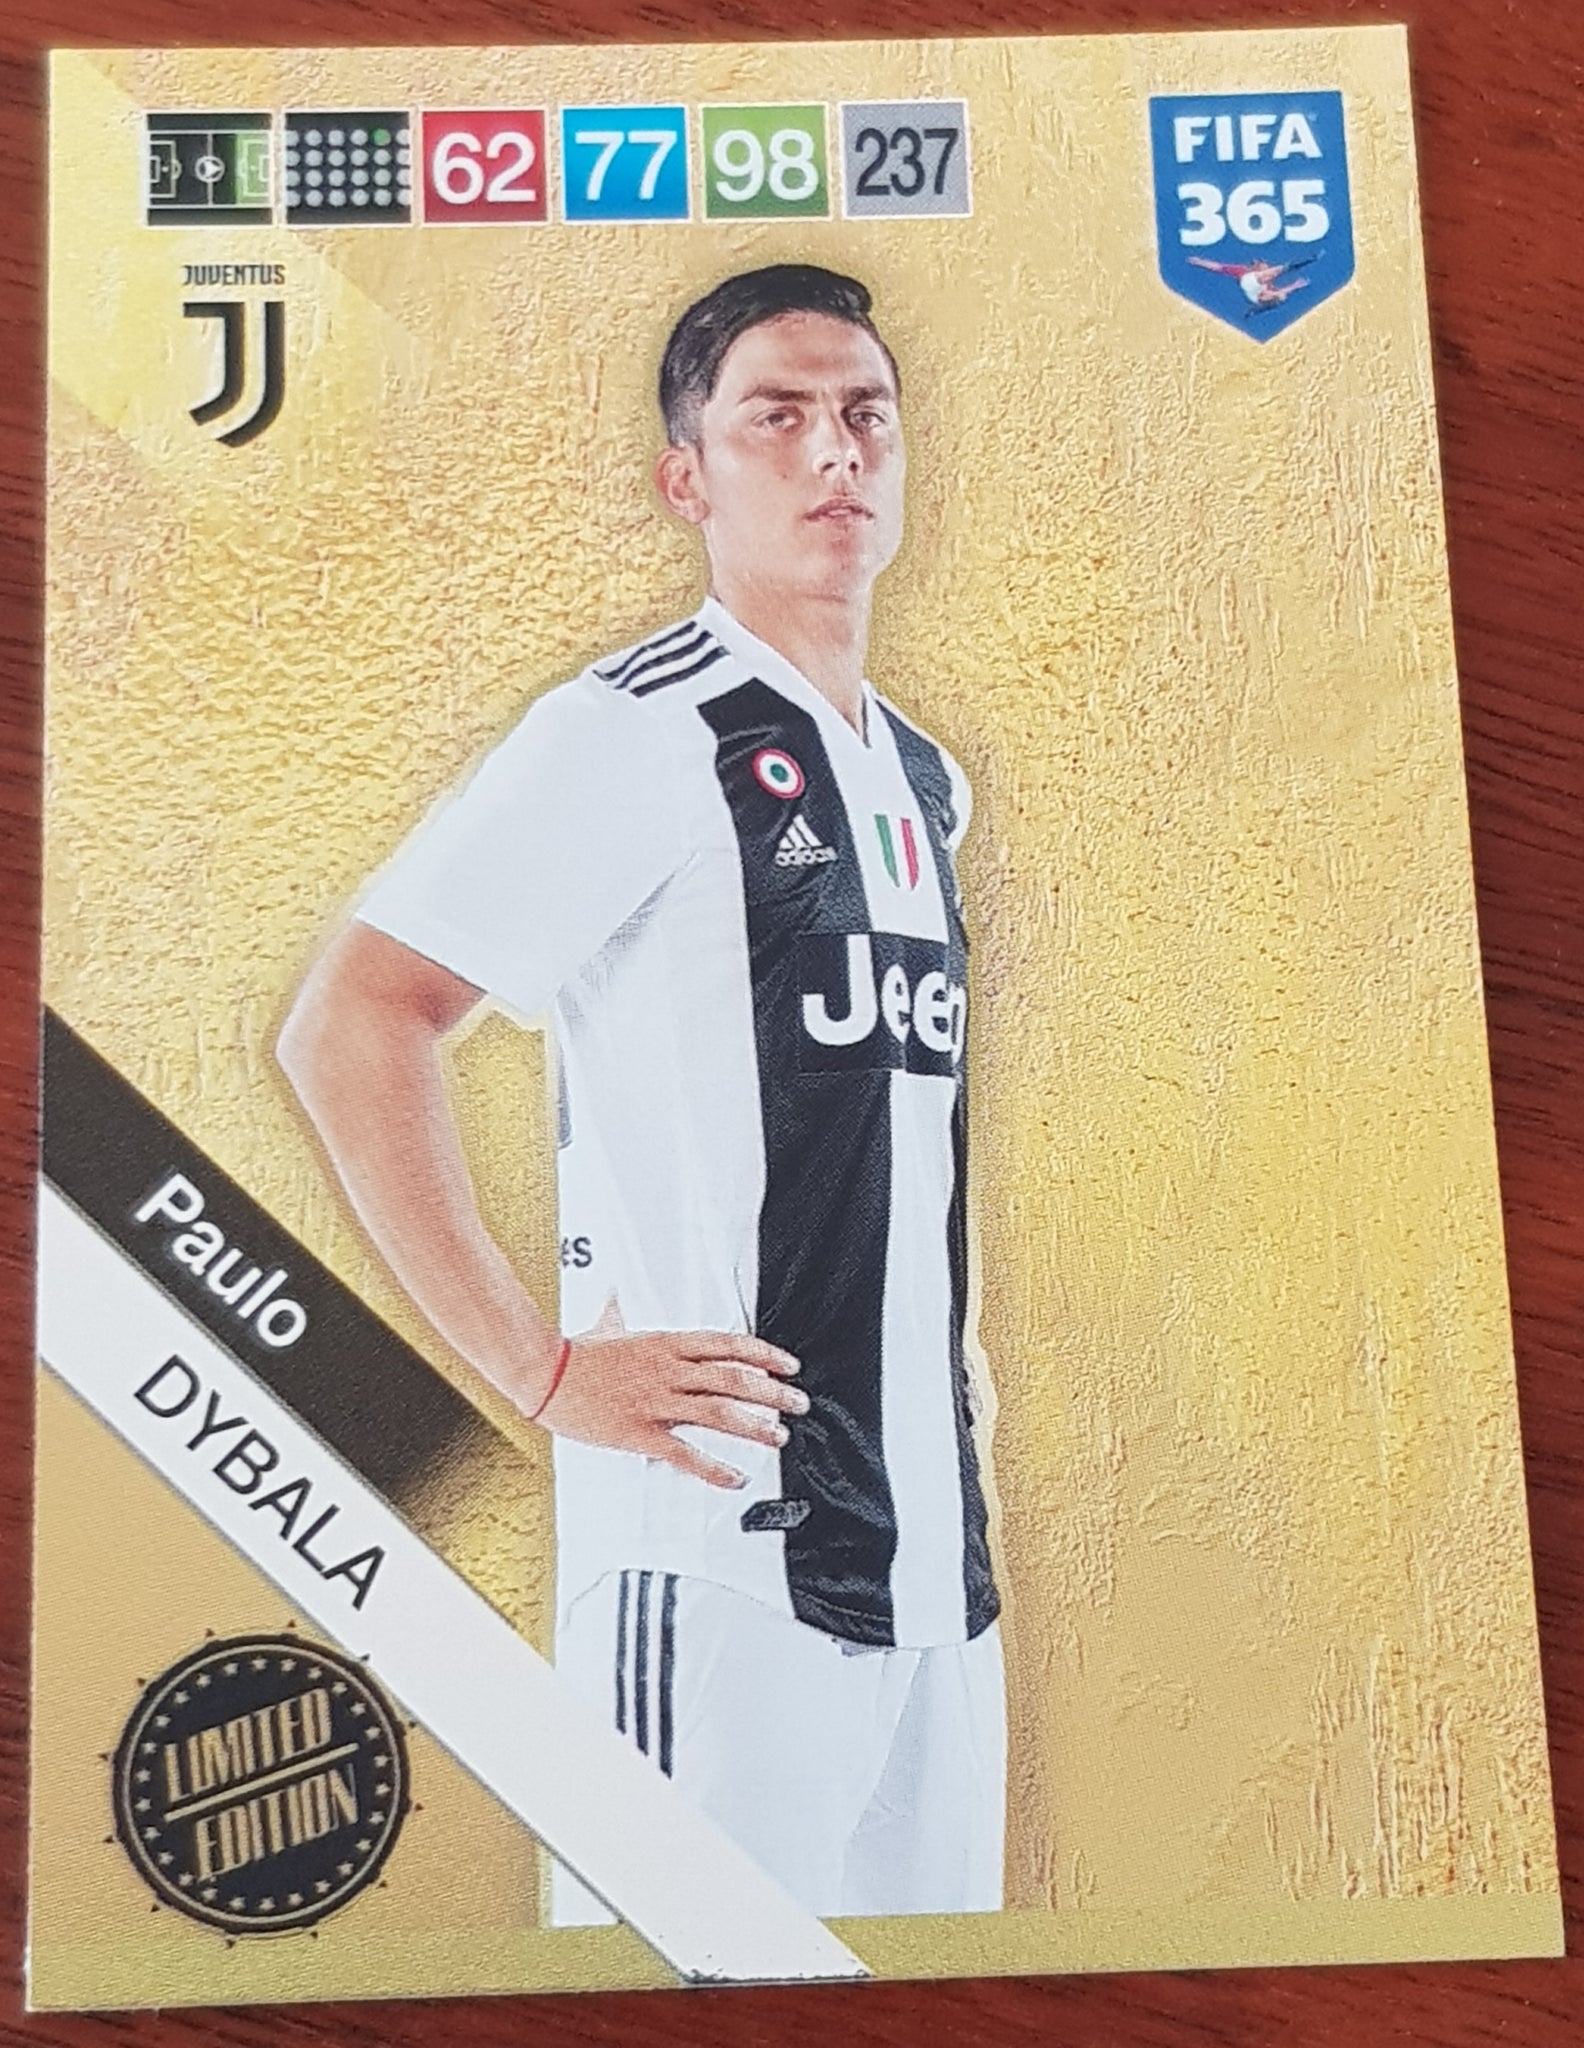 2018 Panini Adrenalyn FIFA 365 Paulo Dybala Limited Edition Trading Card